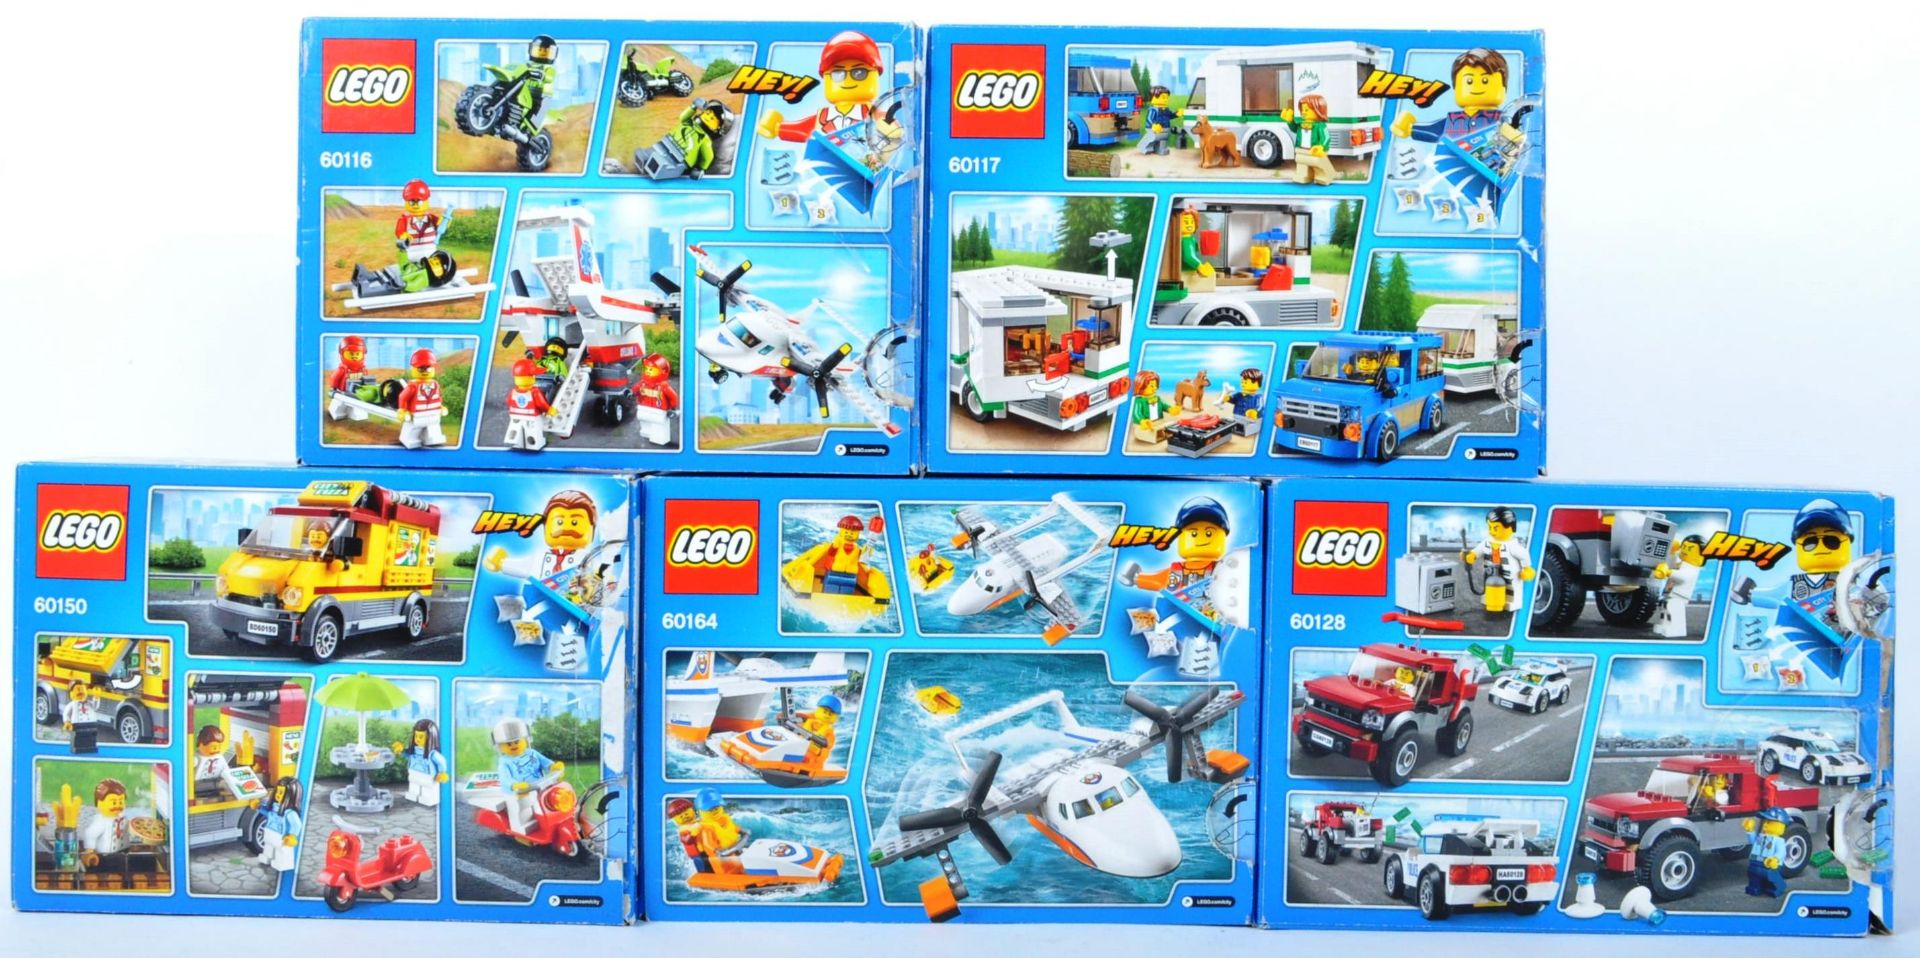 LEGO SETS - LEGO CITY - 60116 -60117 - 60128 - 60150 - 60164 - Bild 2 aus 3